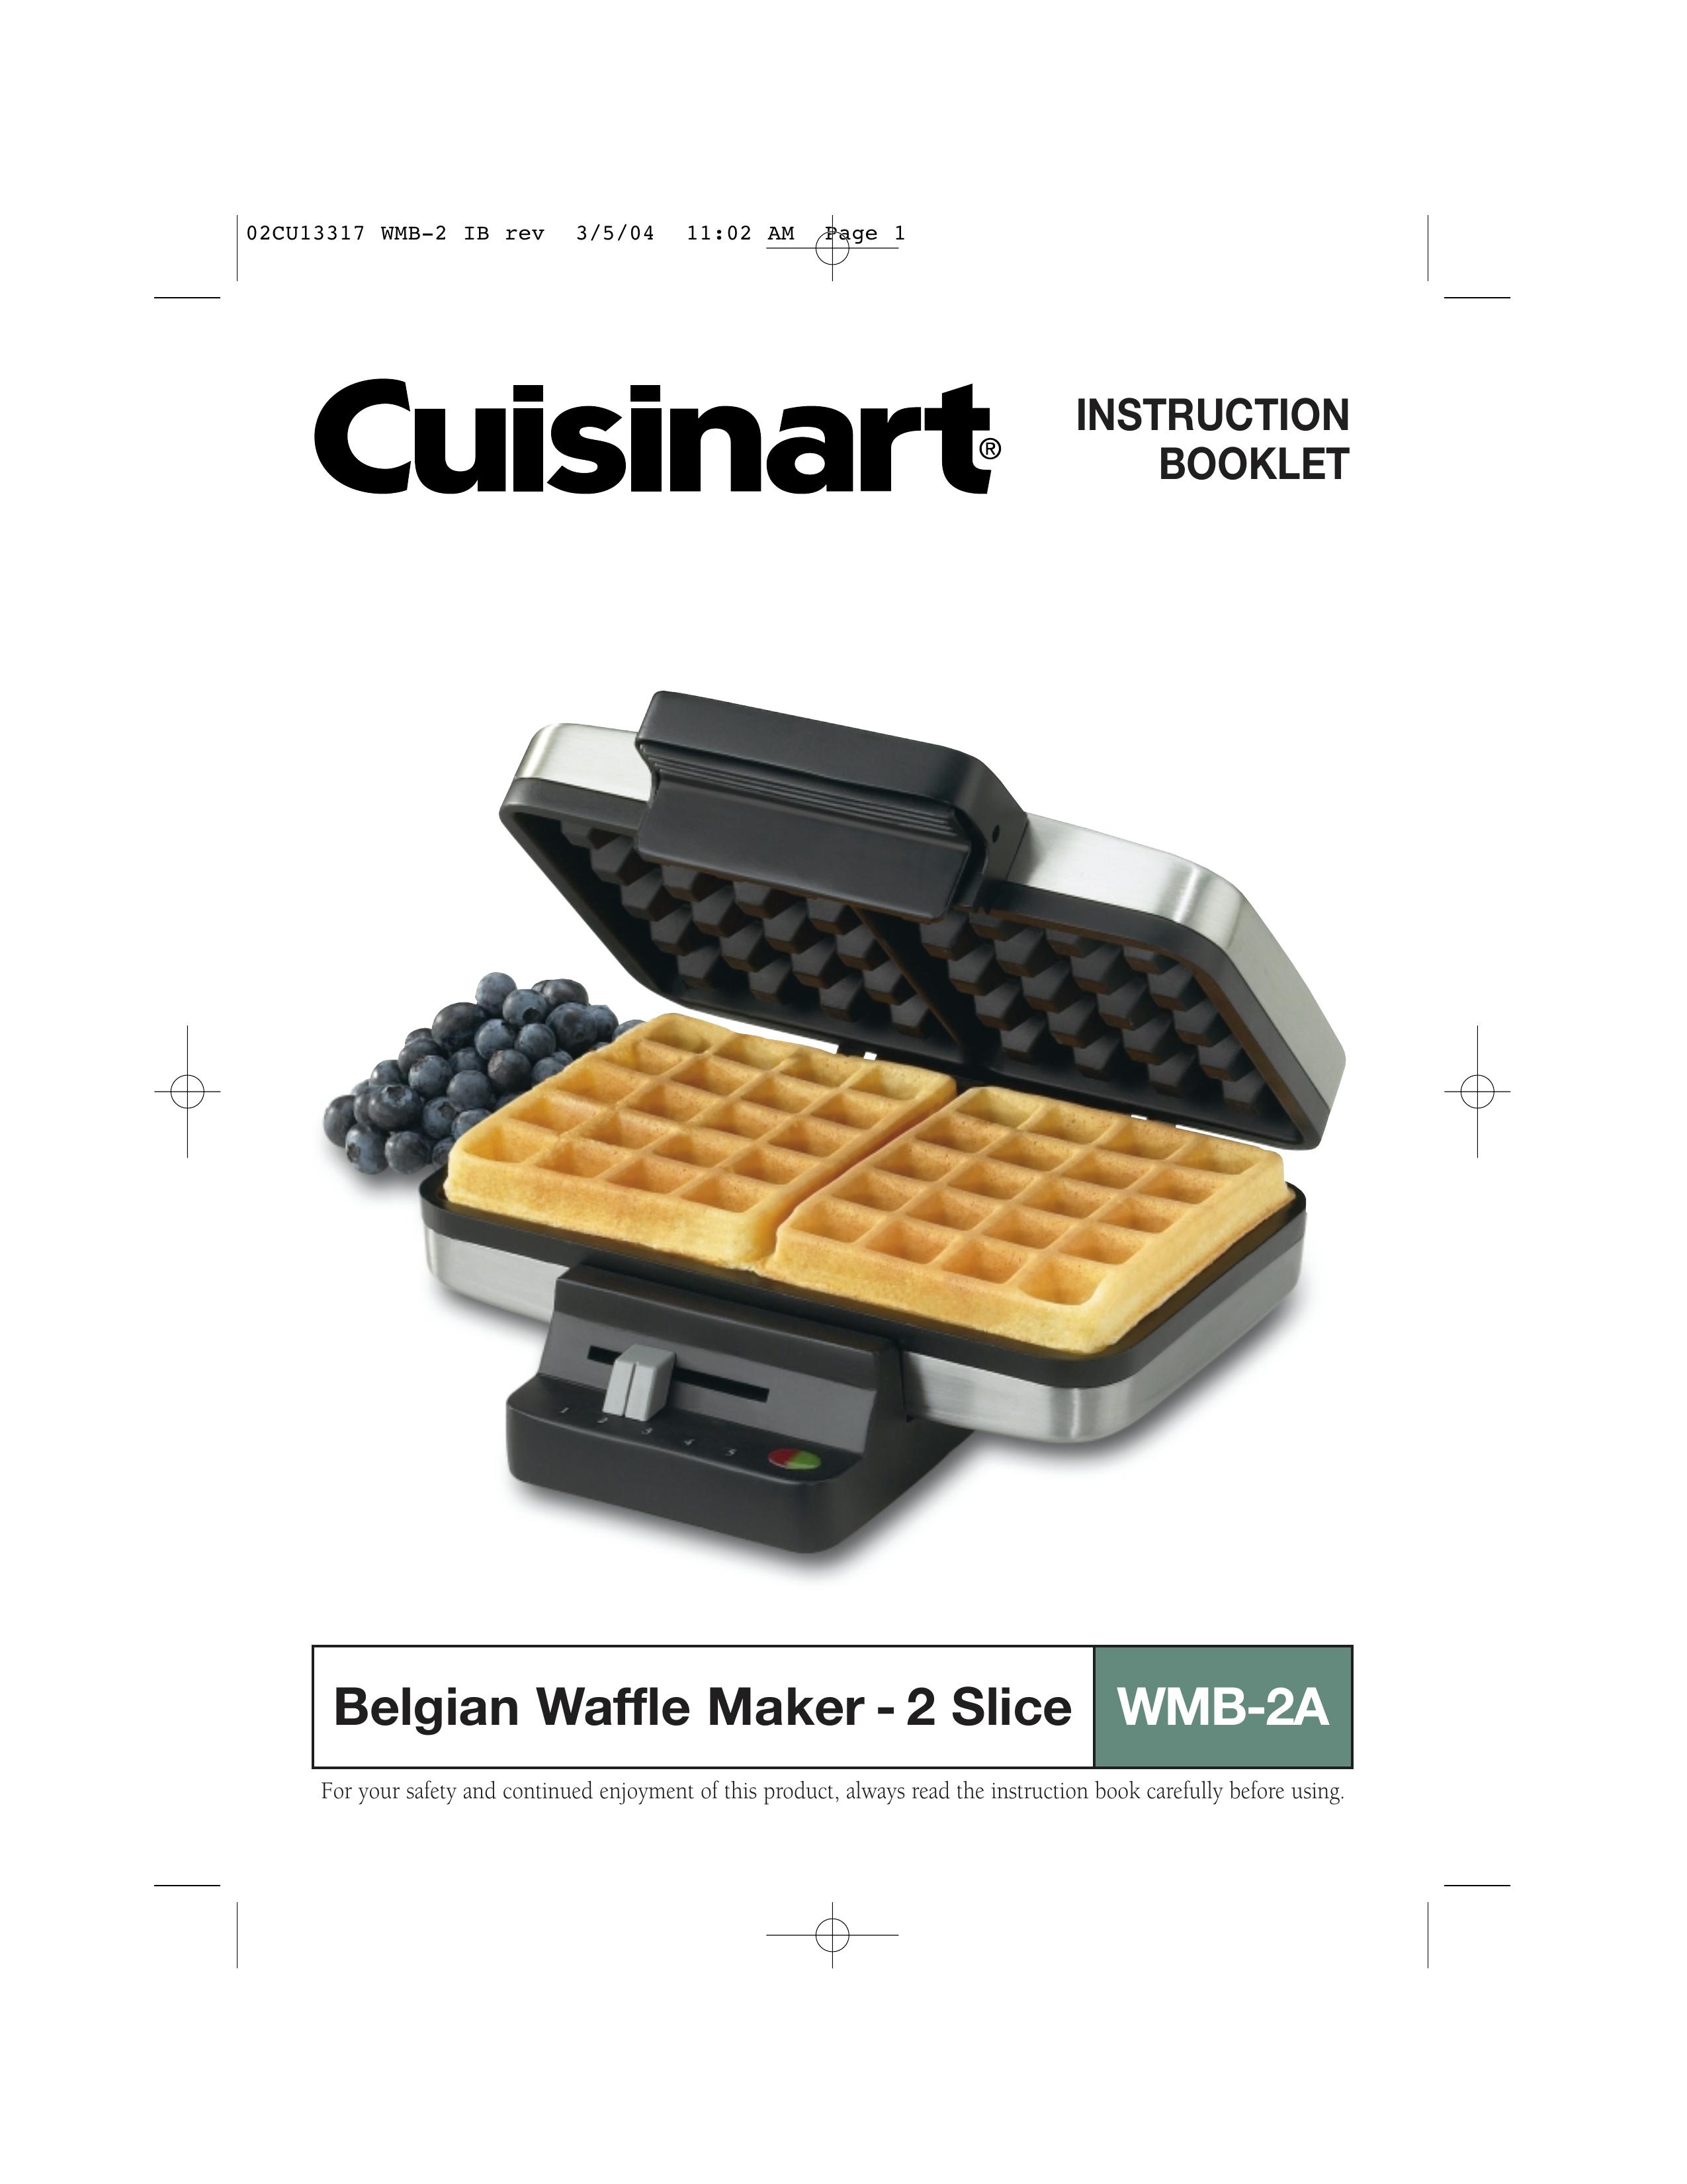 Cuisinart WMB-2A Waffle Iron User Manual